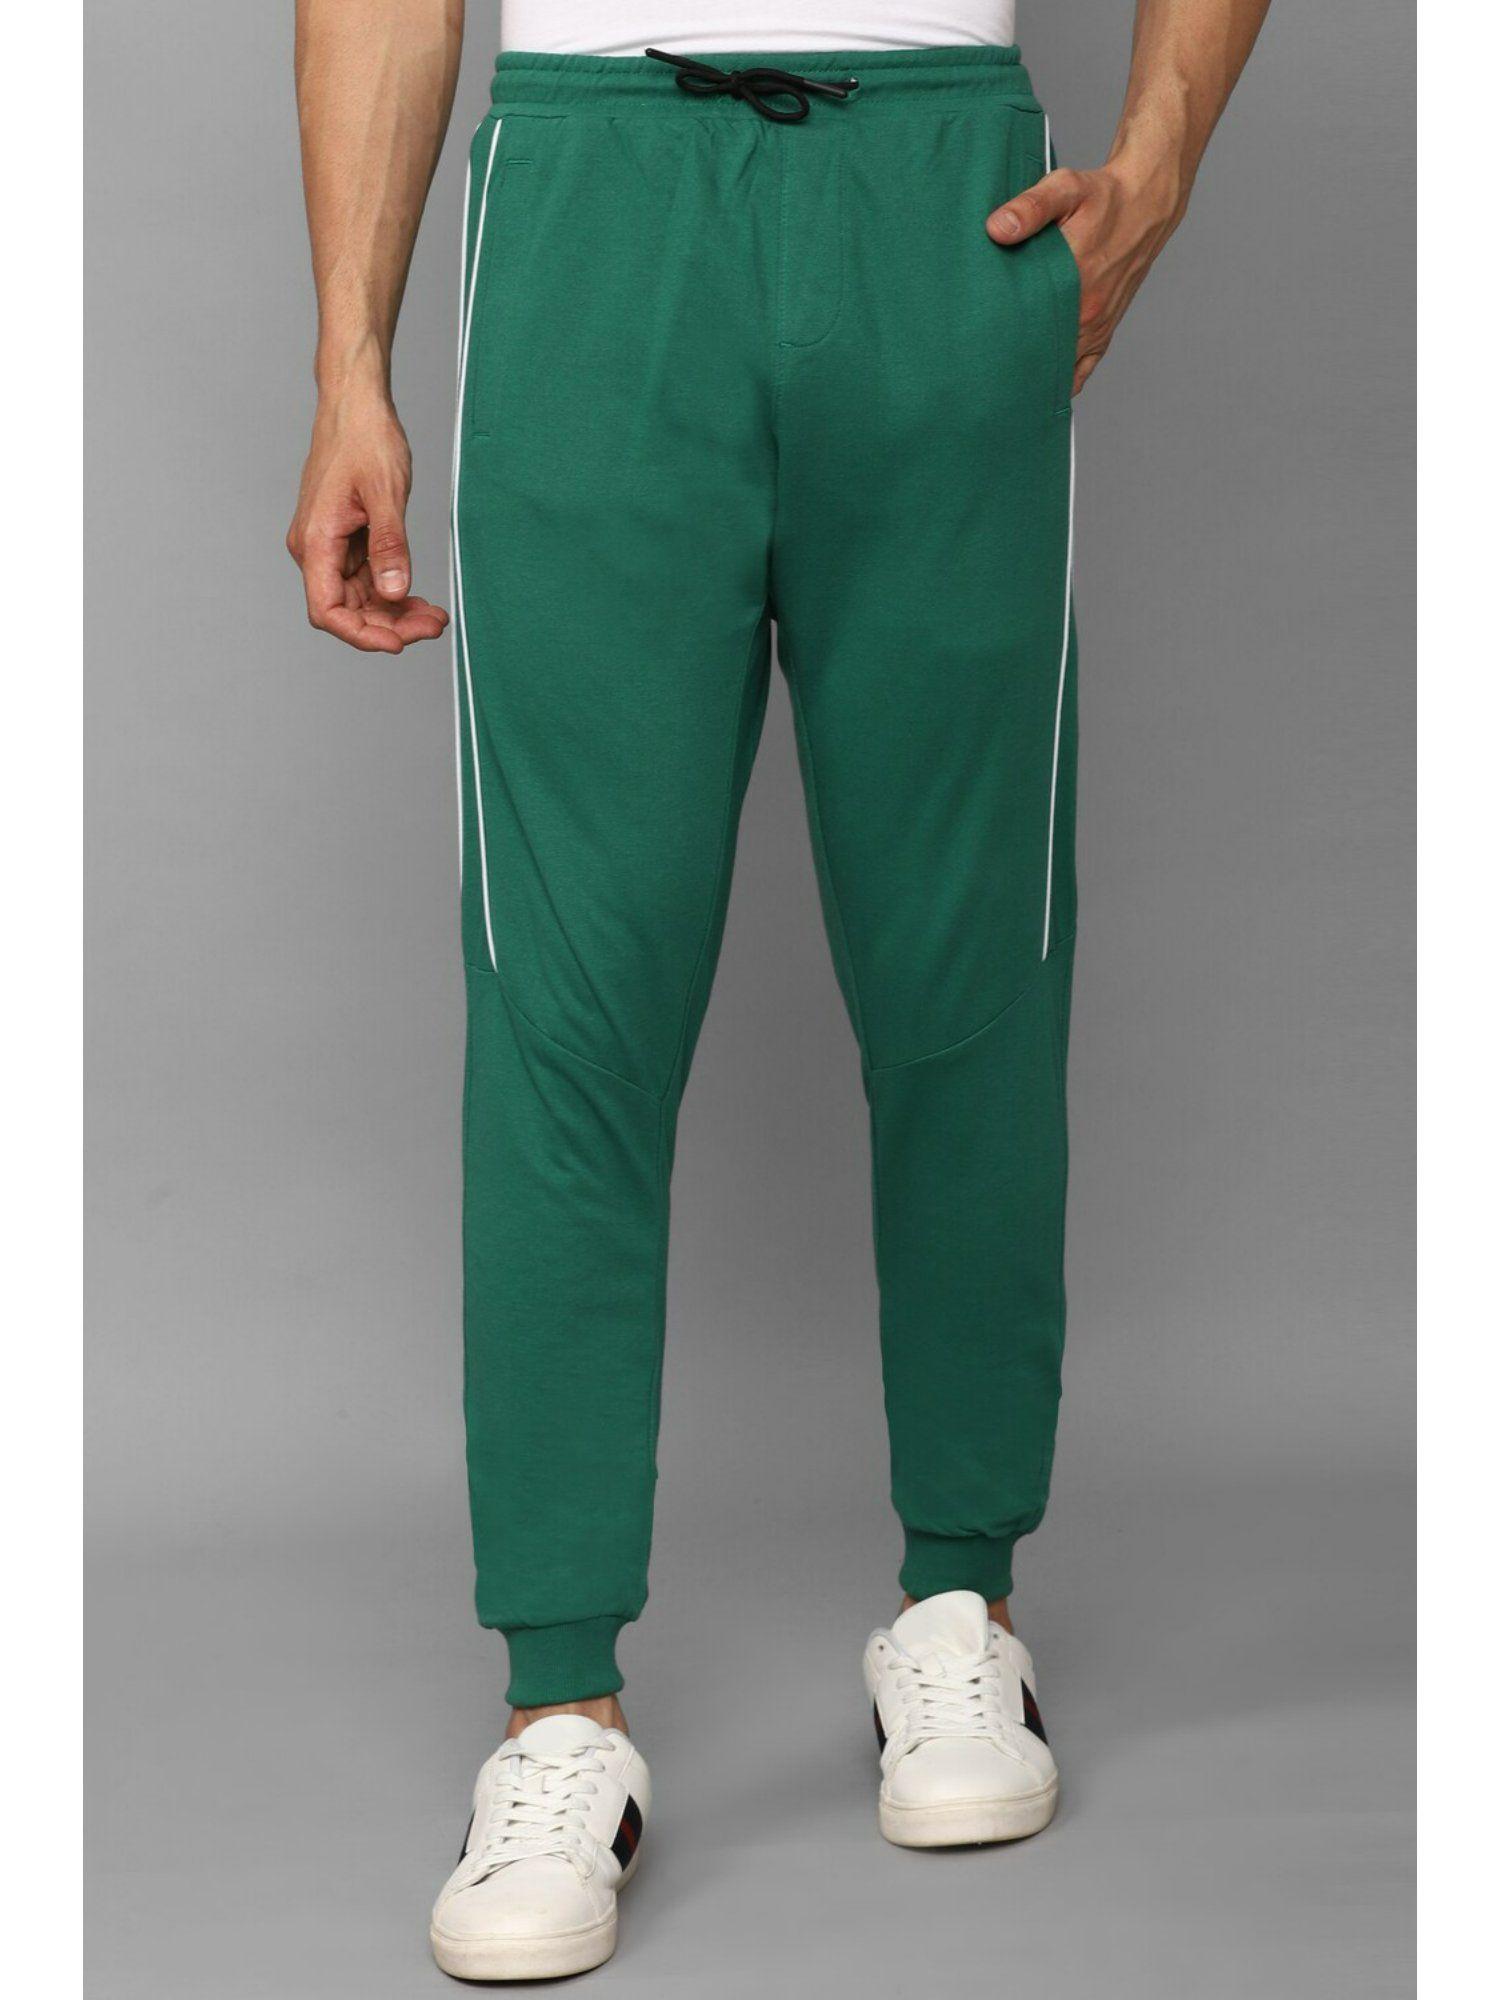 men striped regular fit green jogger pants